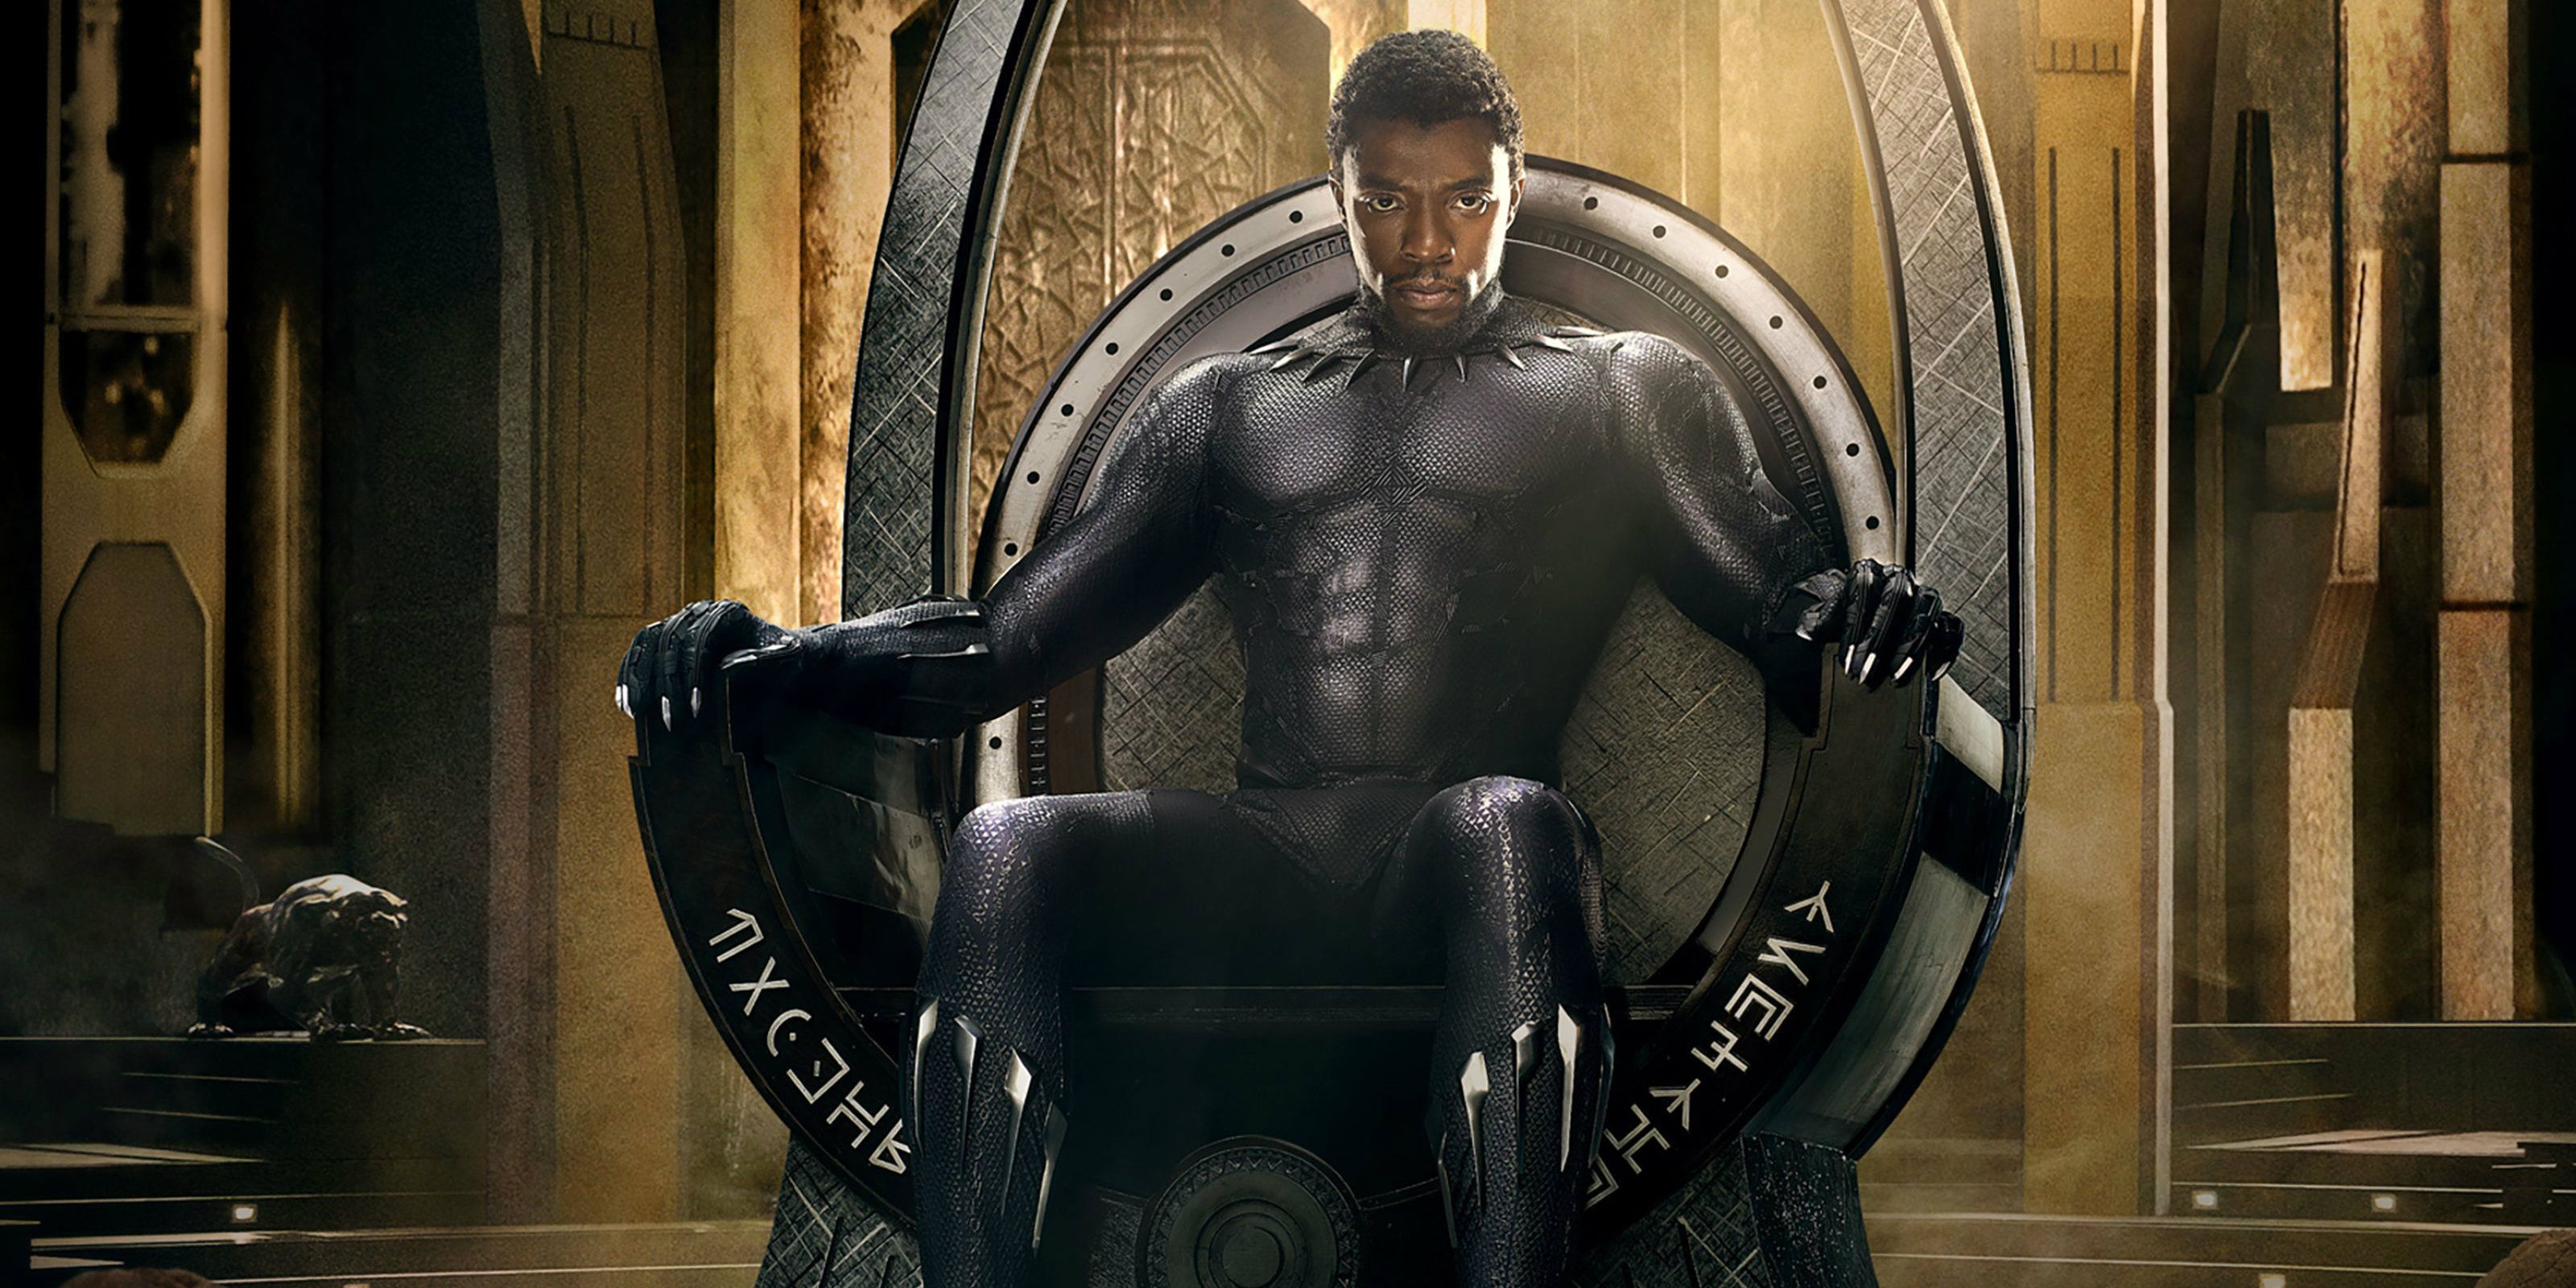 Black Panther poster with Chadwick Boseman